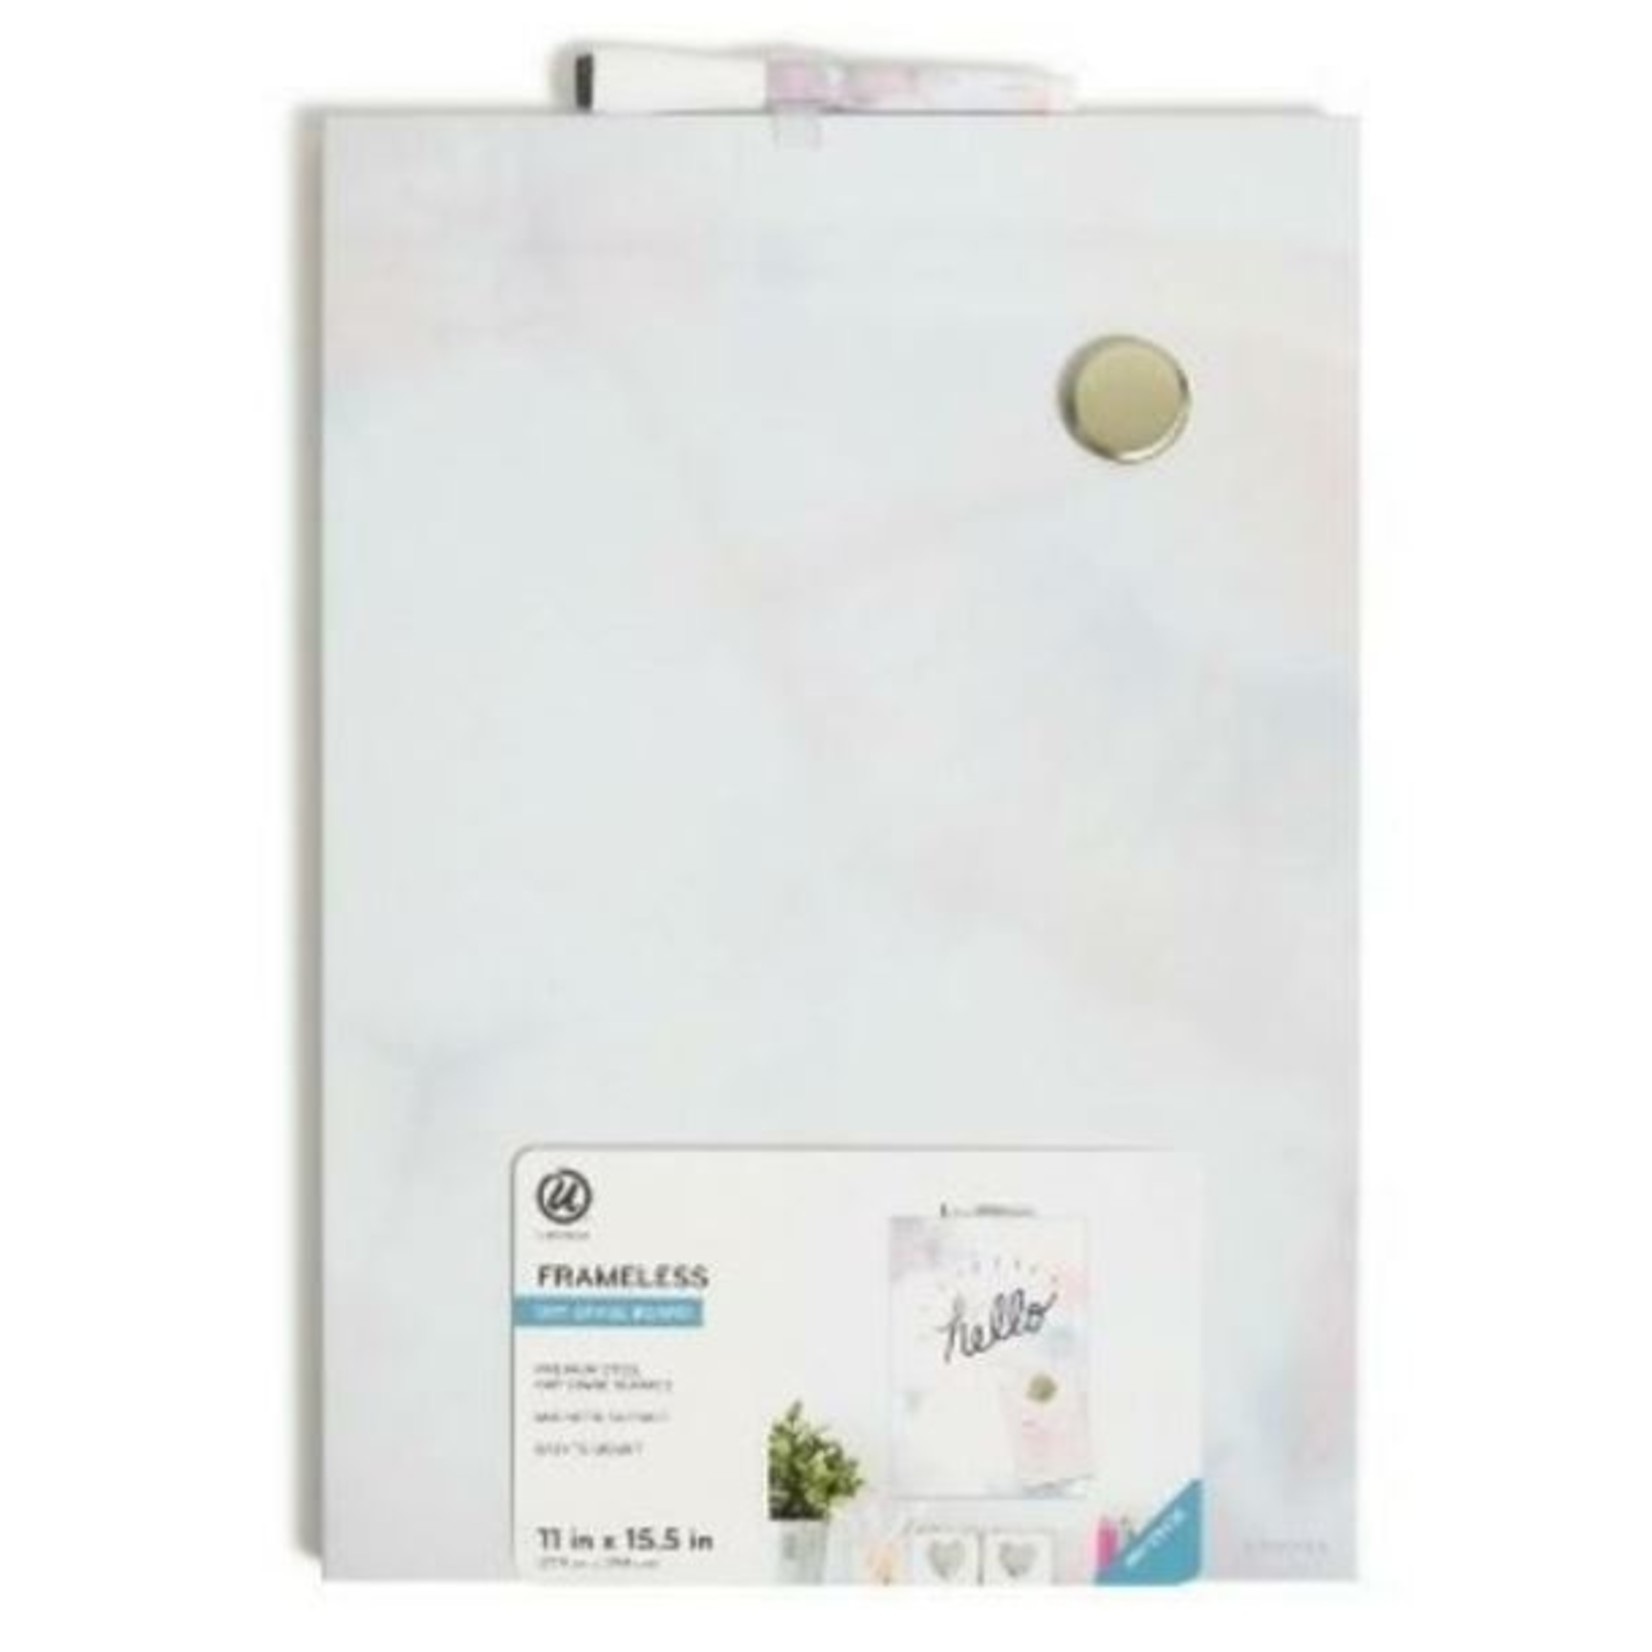 Nova U Brands 11"x15.5" Frameless Dry Erase Board